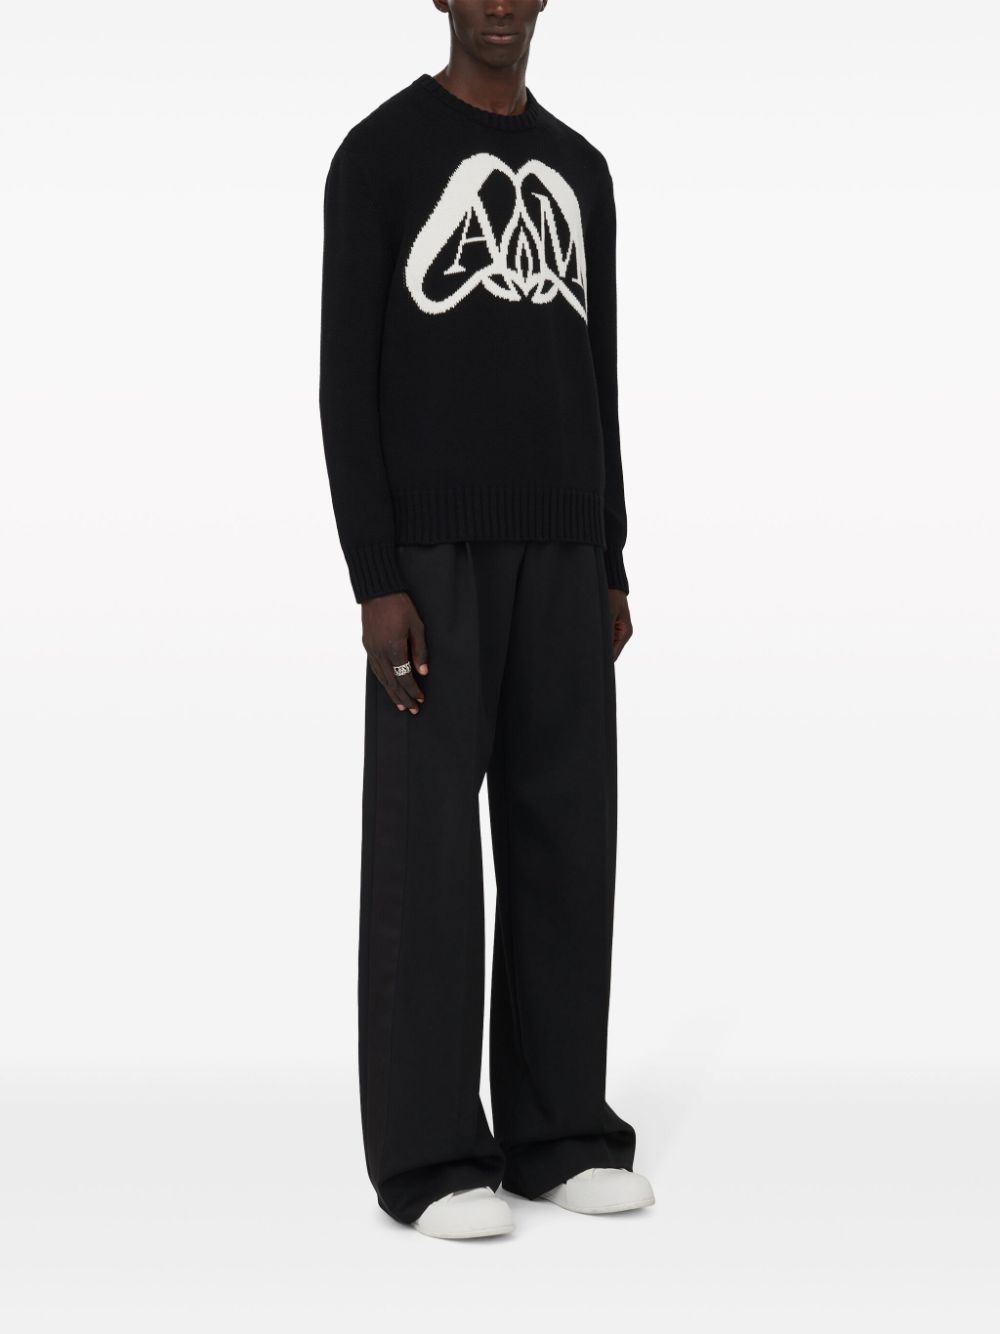 ALEXANDER MCQUEEN Elegant Logo Intarsia Cotton Sweatshirt for Men in Black and White